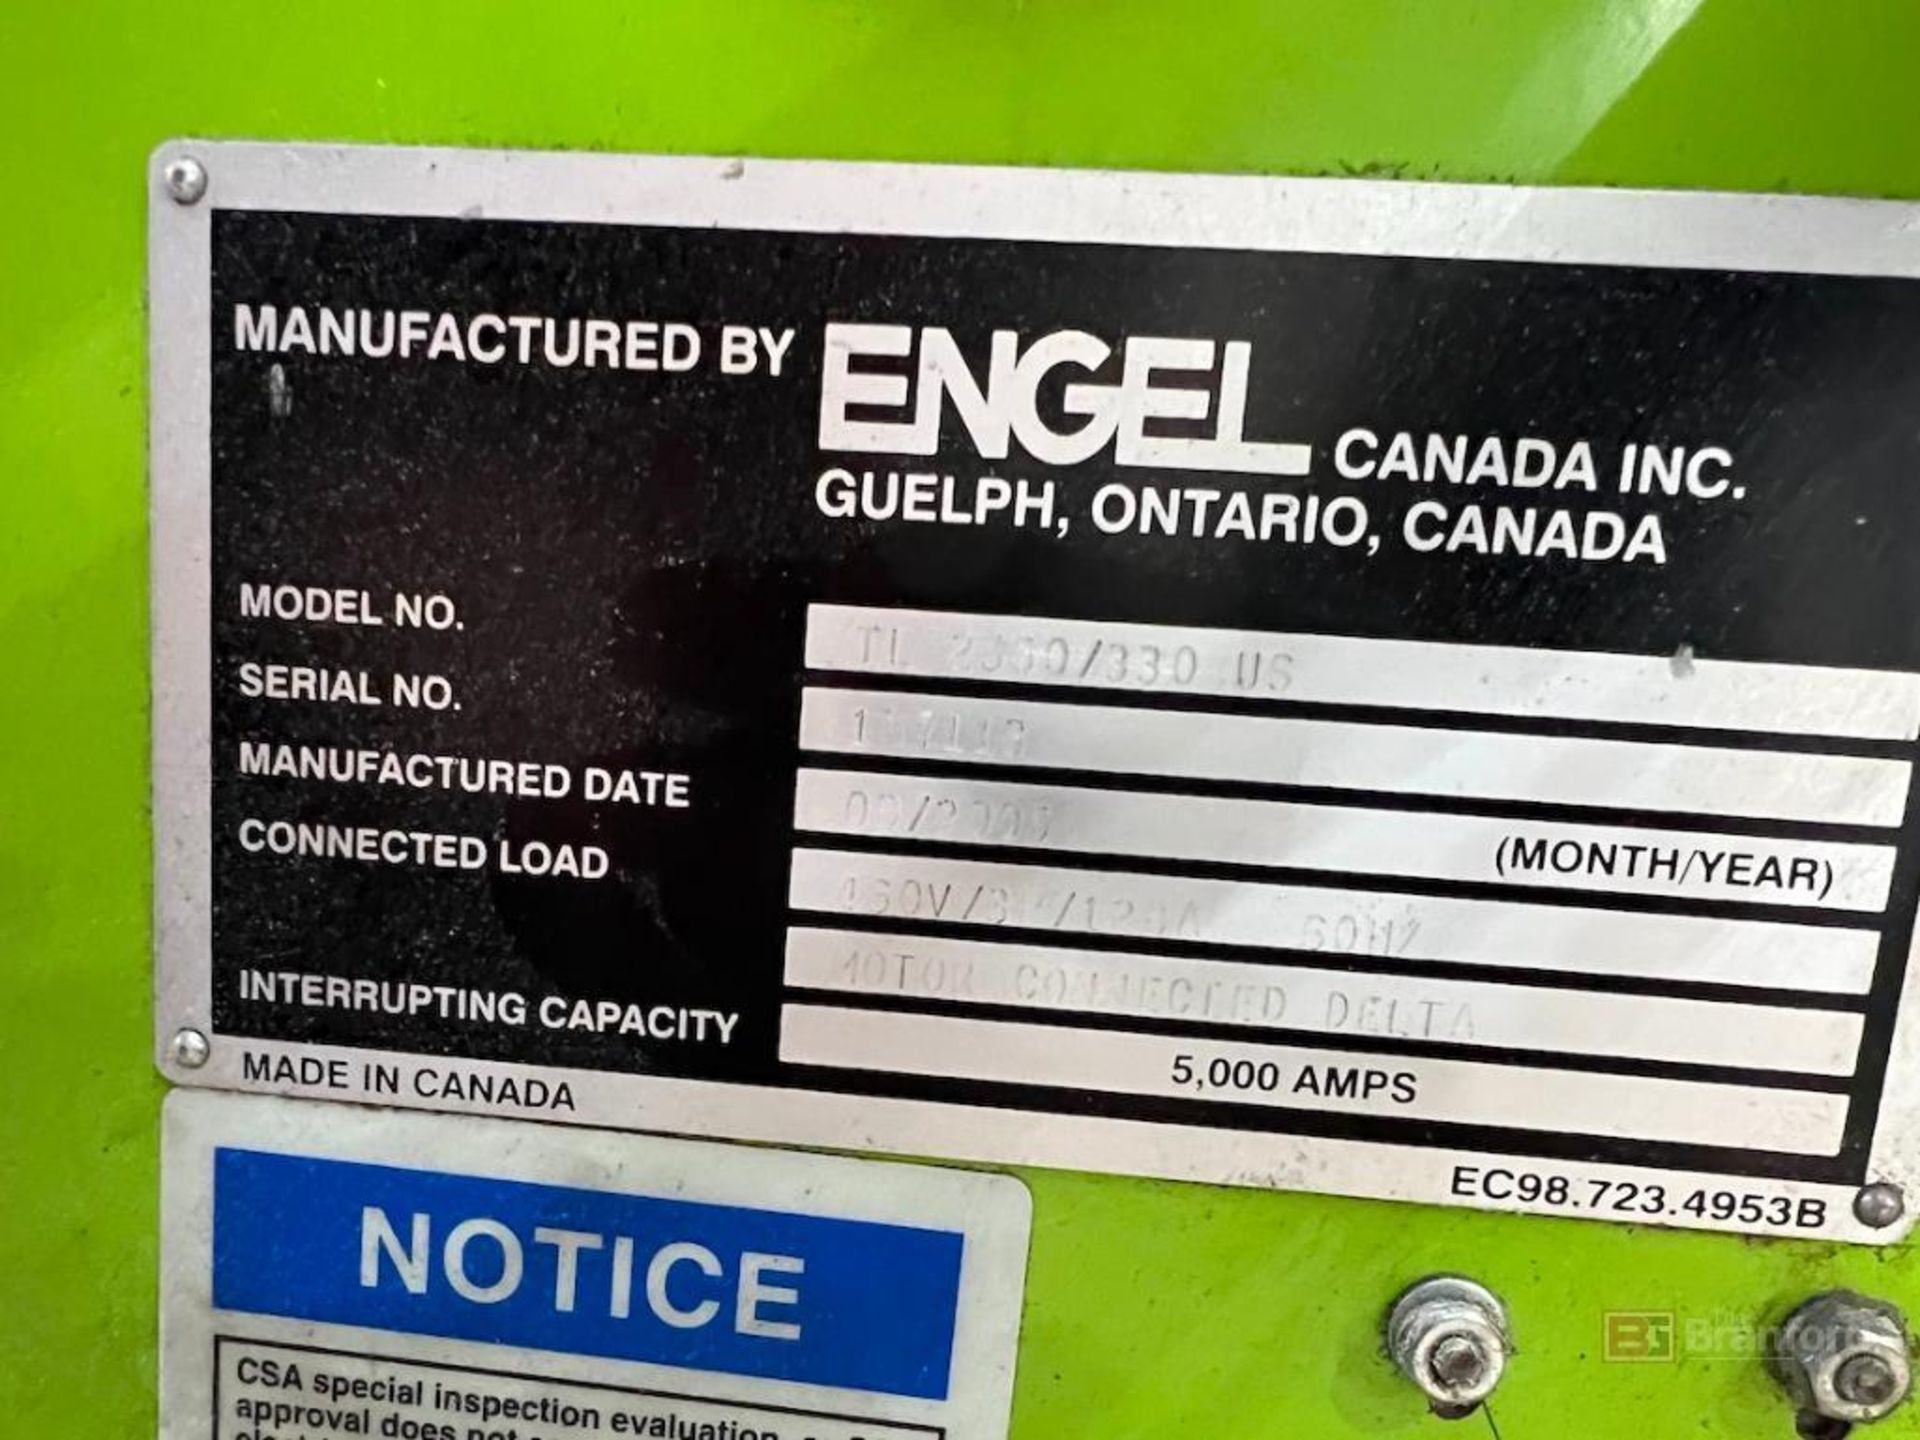 Engel TL 2550/330 US Tiebarless Injection Molding Machine - Image 12 of 13